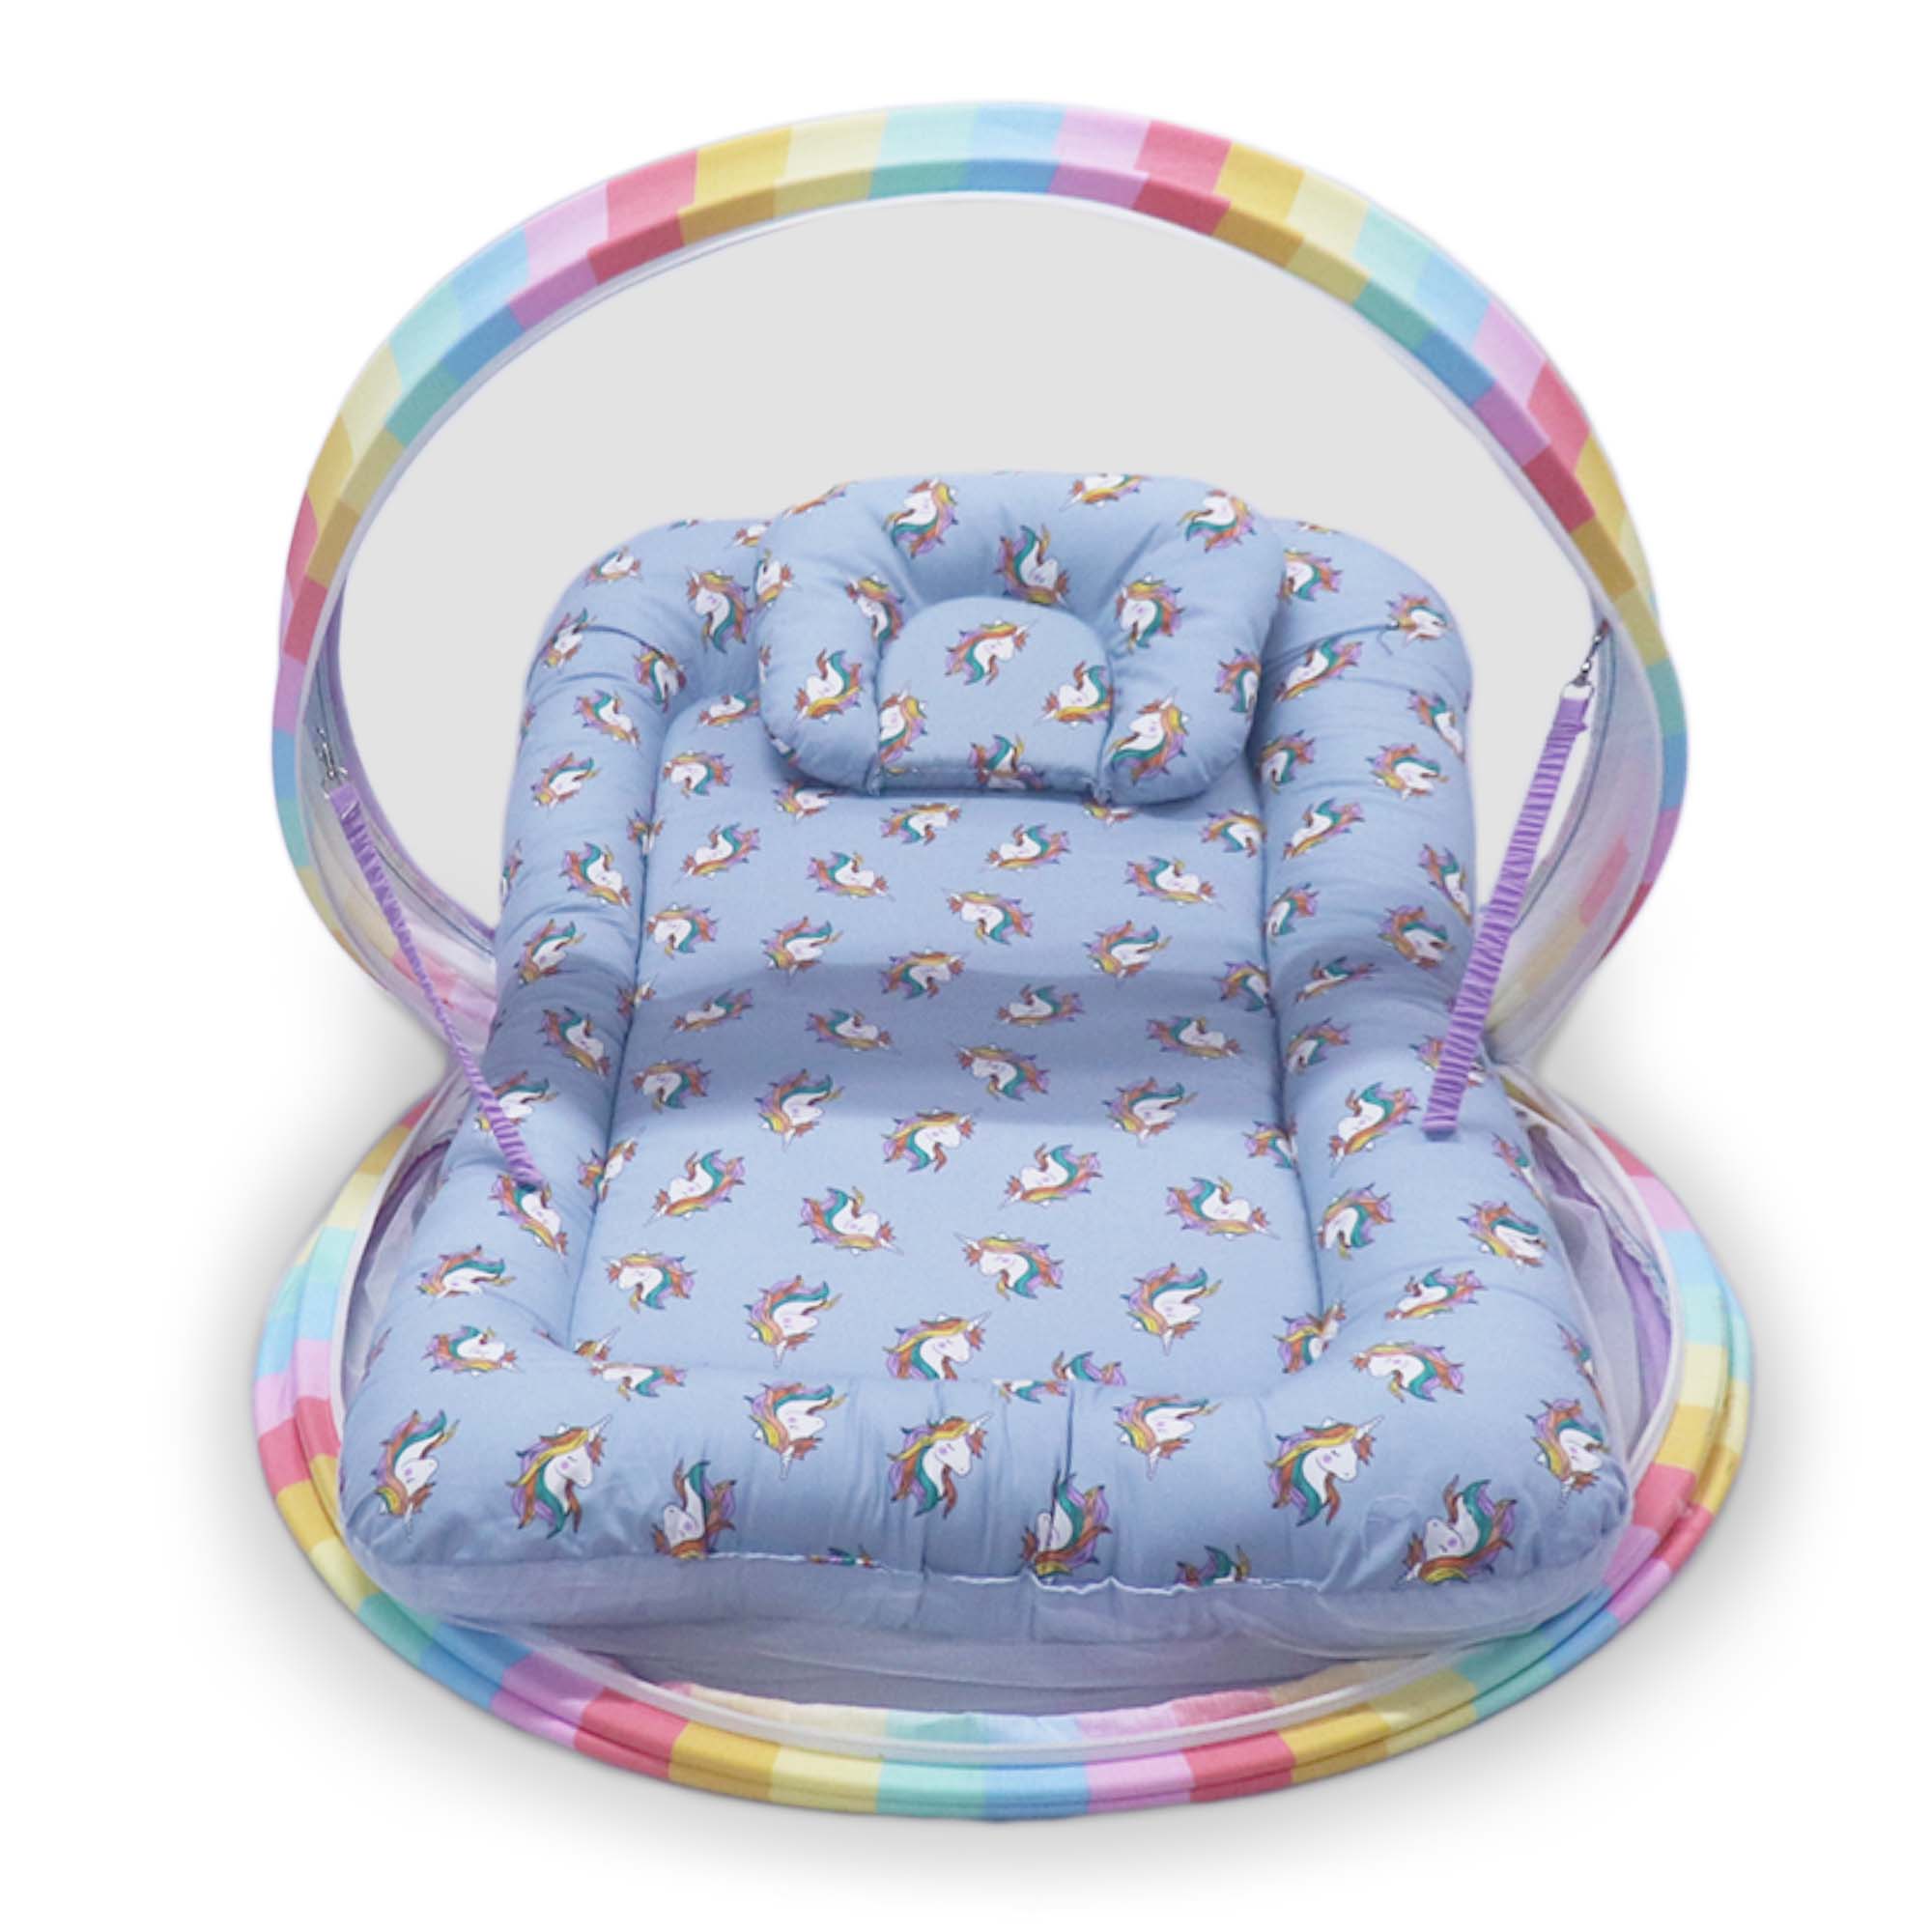 Grey Unicorn -  Kradyl Kroft Bassinet Style Mosquito Net Bedding for Infants